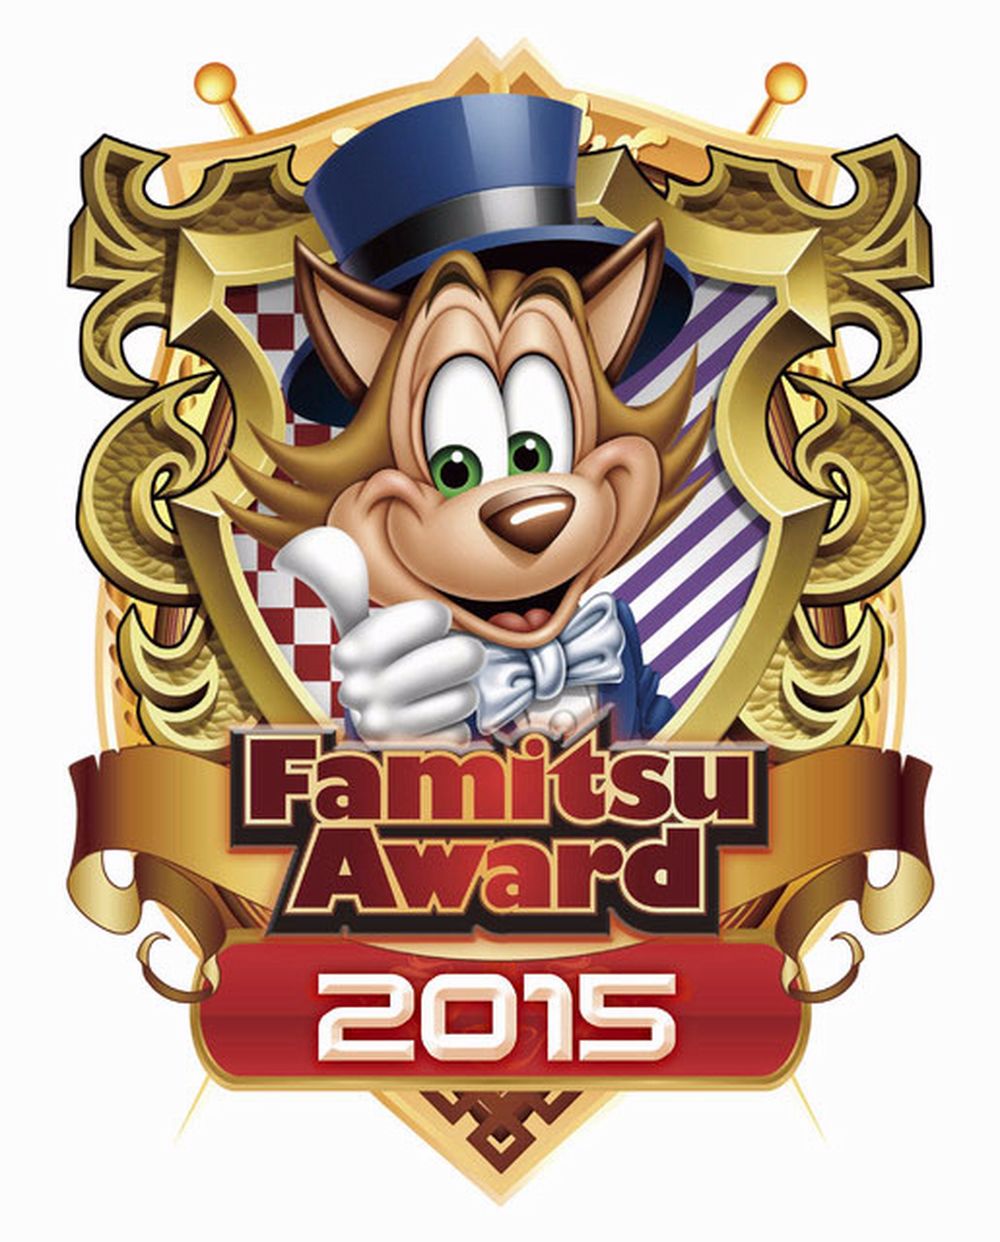 Famitsu-Award-2015-Winners-Announced.jpg